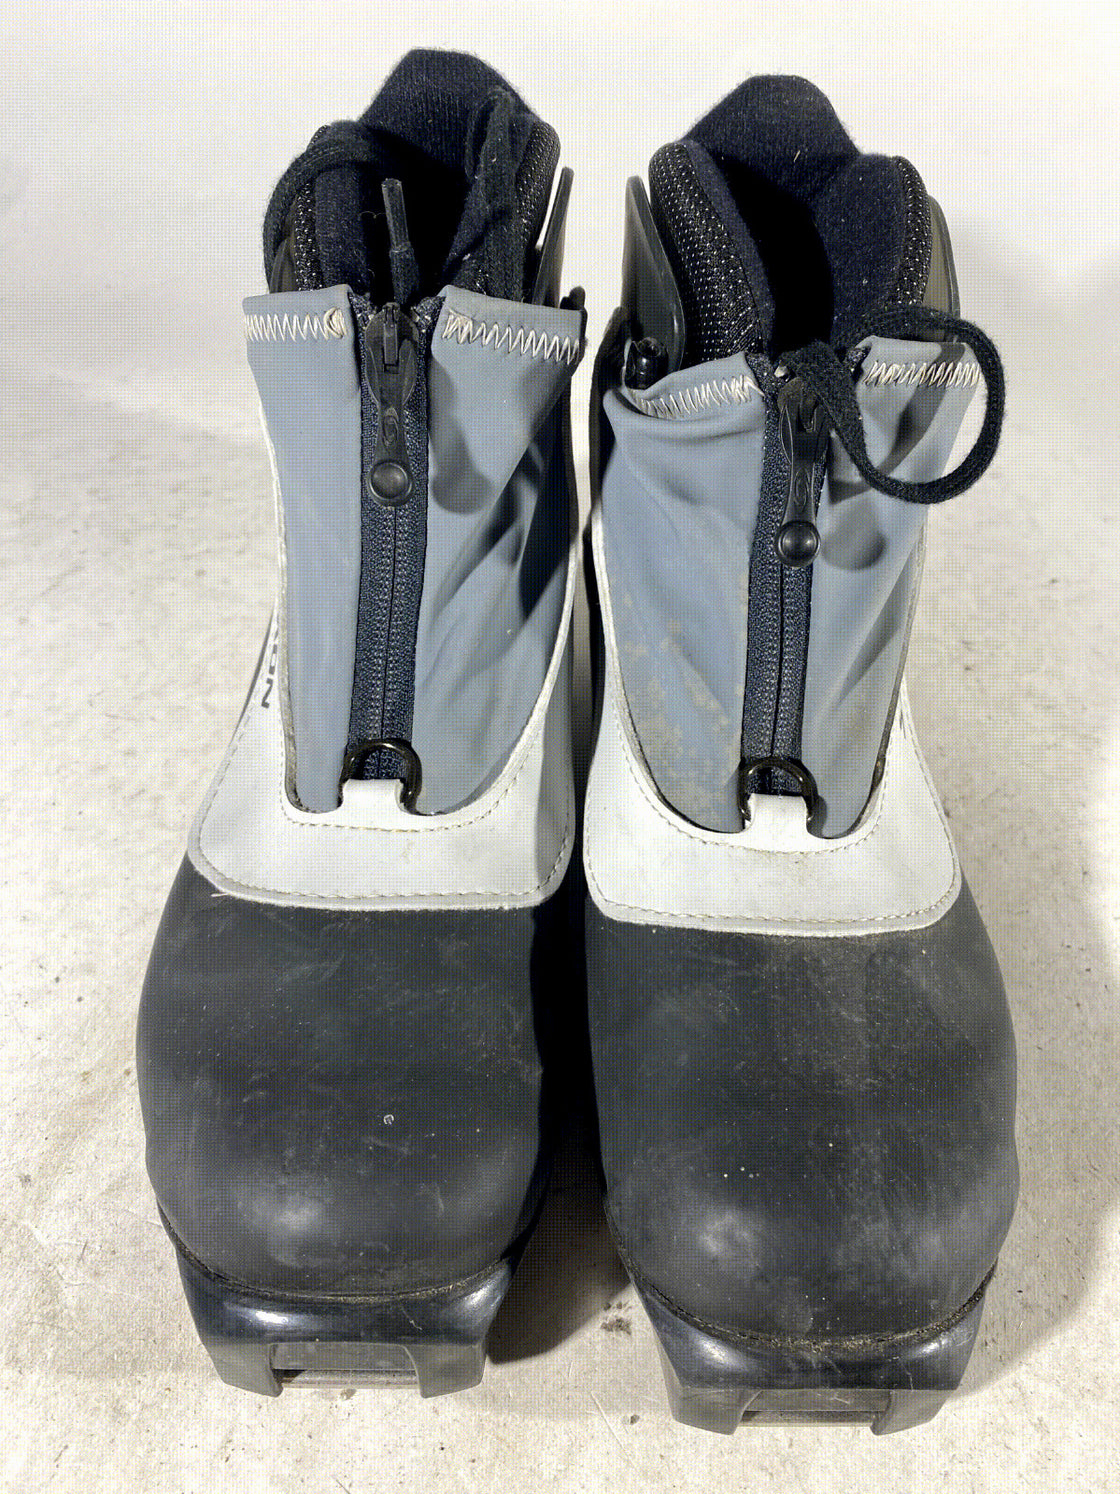 Salomon Classic Nordic Cross Country Ski Boots Size EU40 US7 for SNS Profil